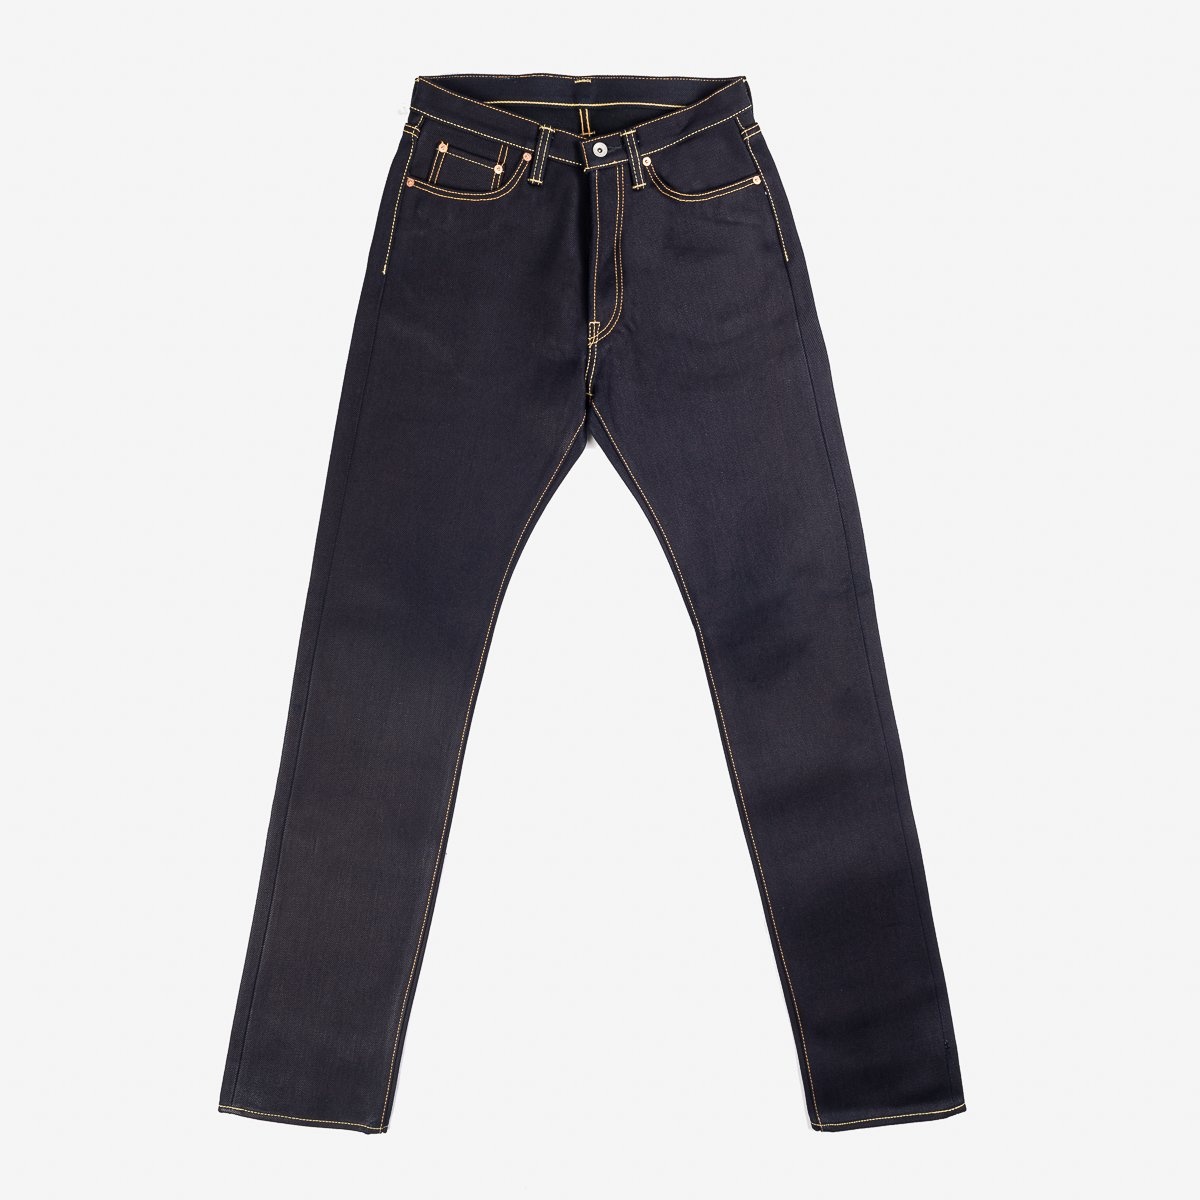 IH-888-XHSib 25oz Selvedge Denim Medium/High Rise Tapered Cut Jeans - Indigo/Black - 1